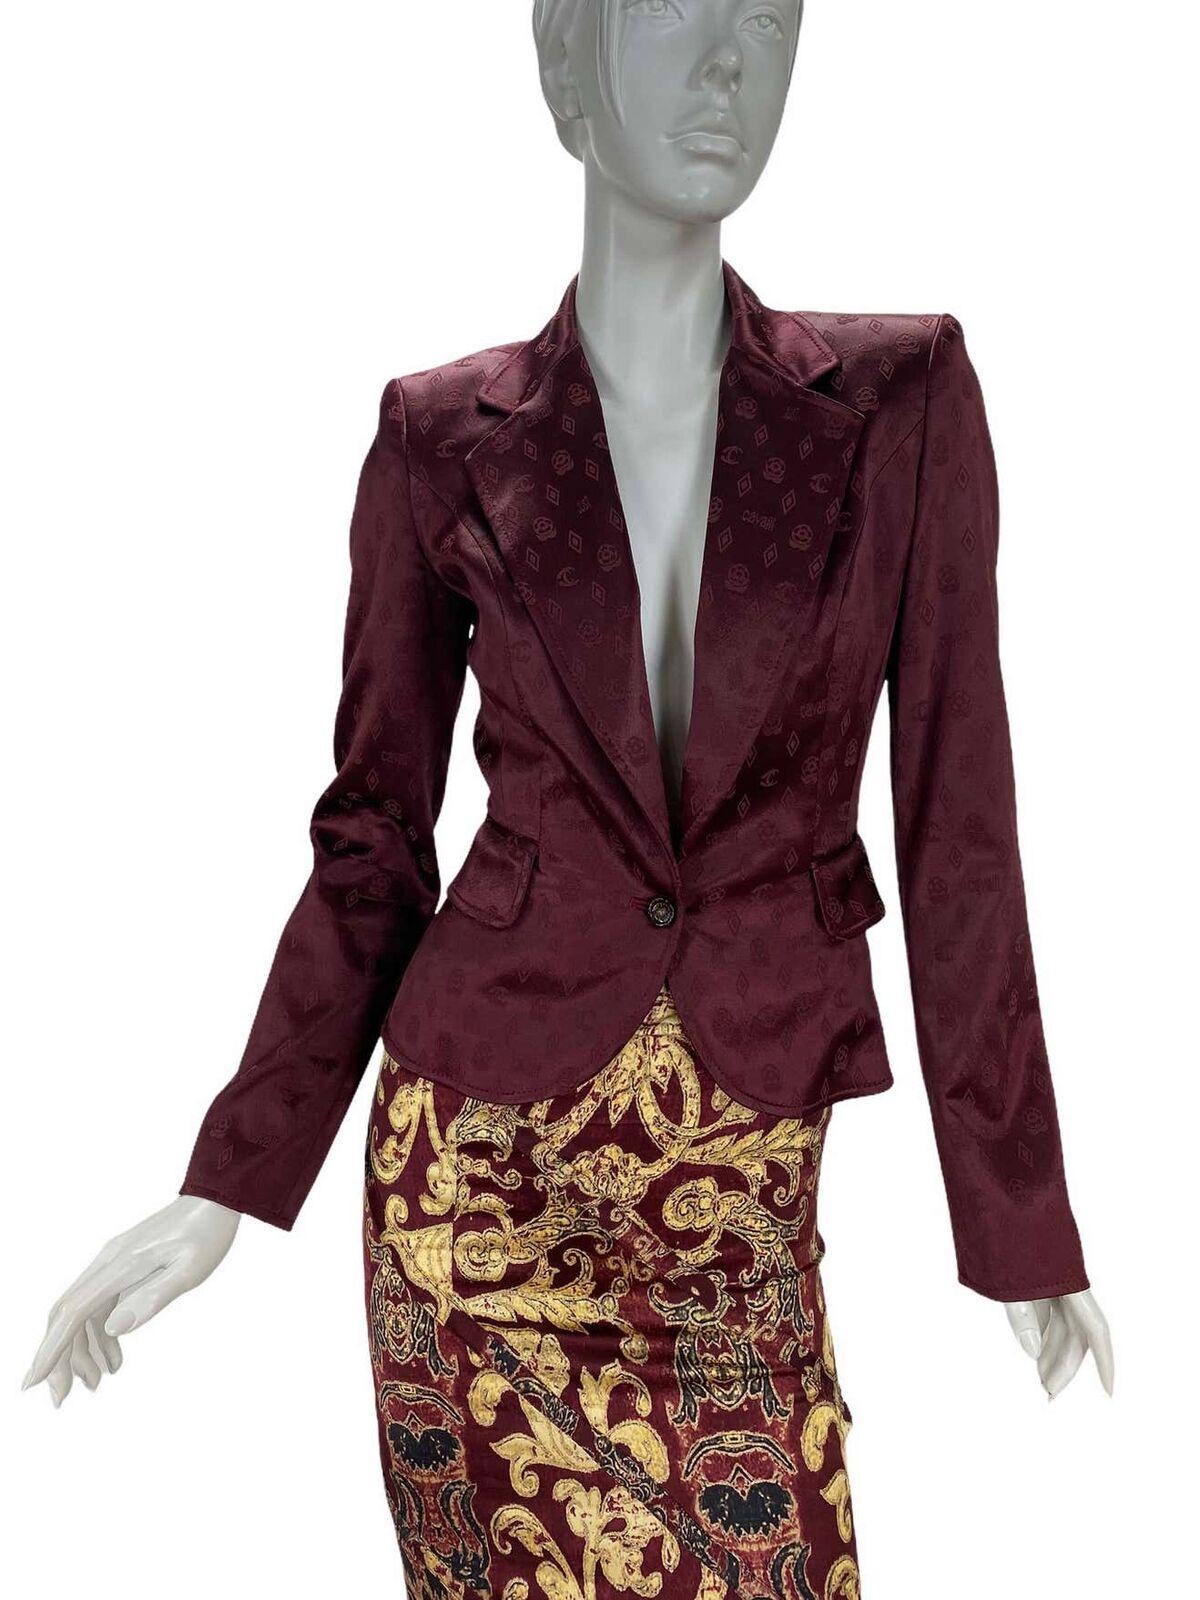 Vintage Roberto Cavalli Evening Long Skirt and Blazer Set
Skirt : Roberto Cavalli
93% Silk, 7% Lycra
Size S
Waist 28